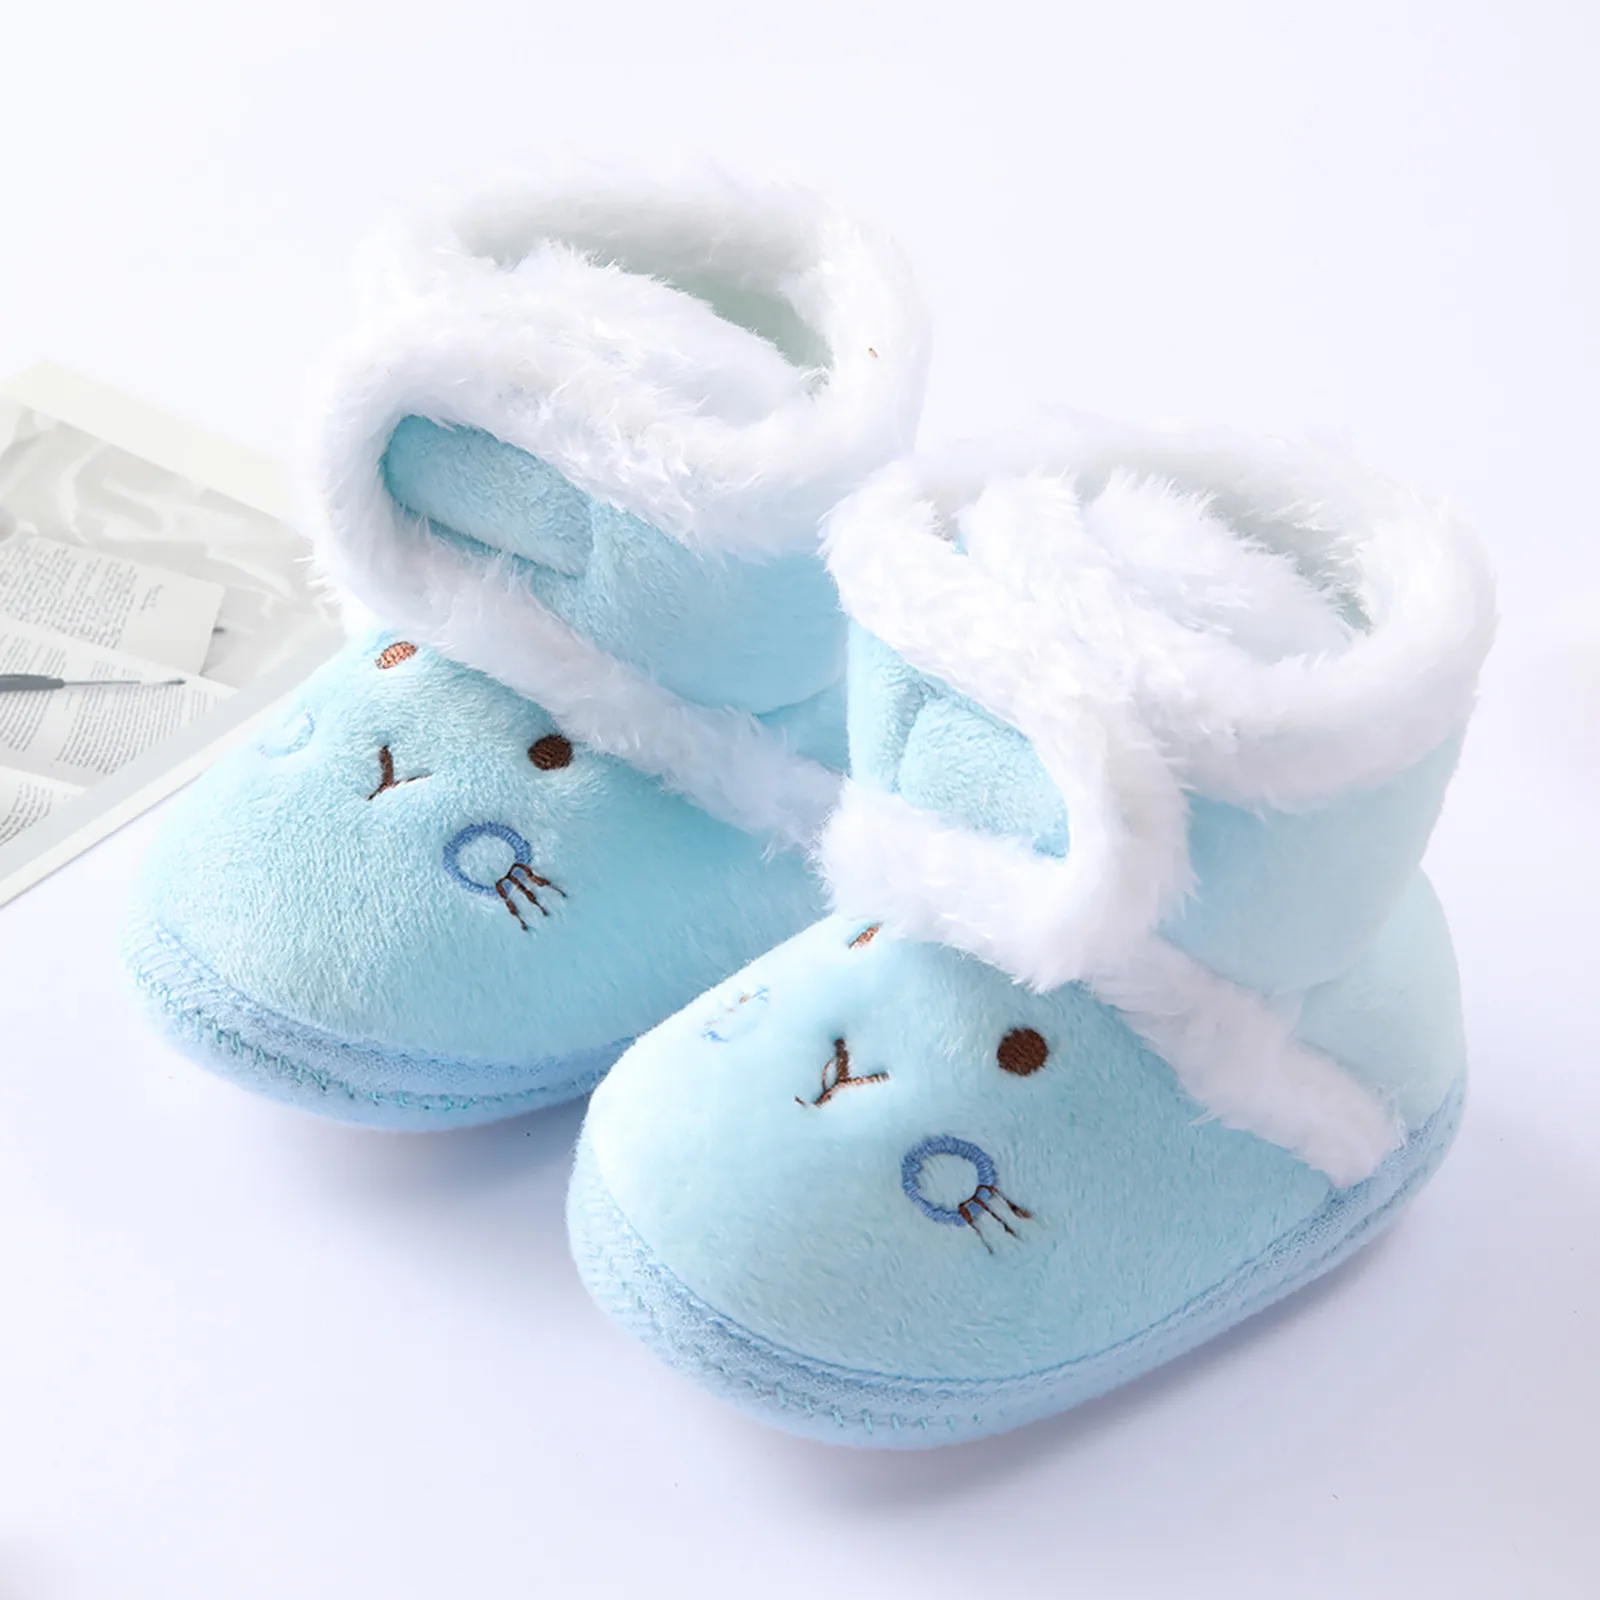 Zoolar Baby Boots Toddler Warm Winter Walking Shoes Newborn Crib Boots First Walker 